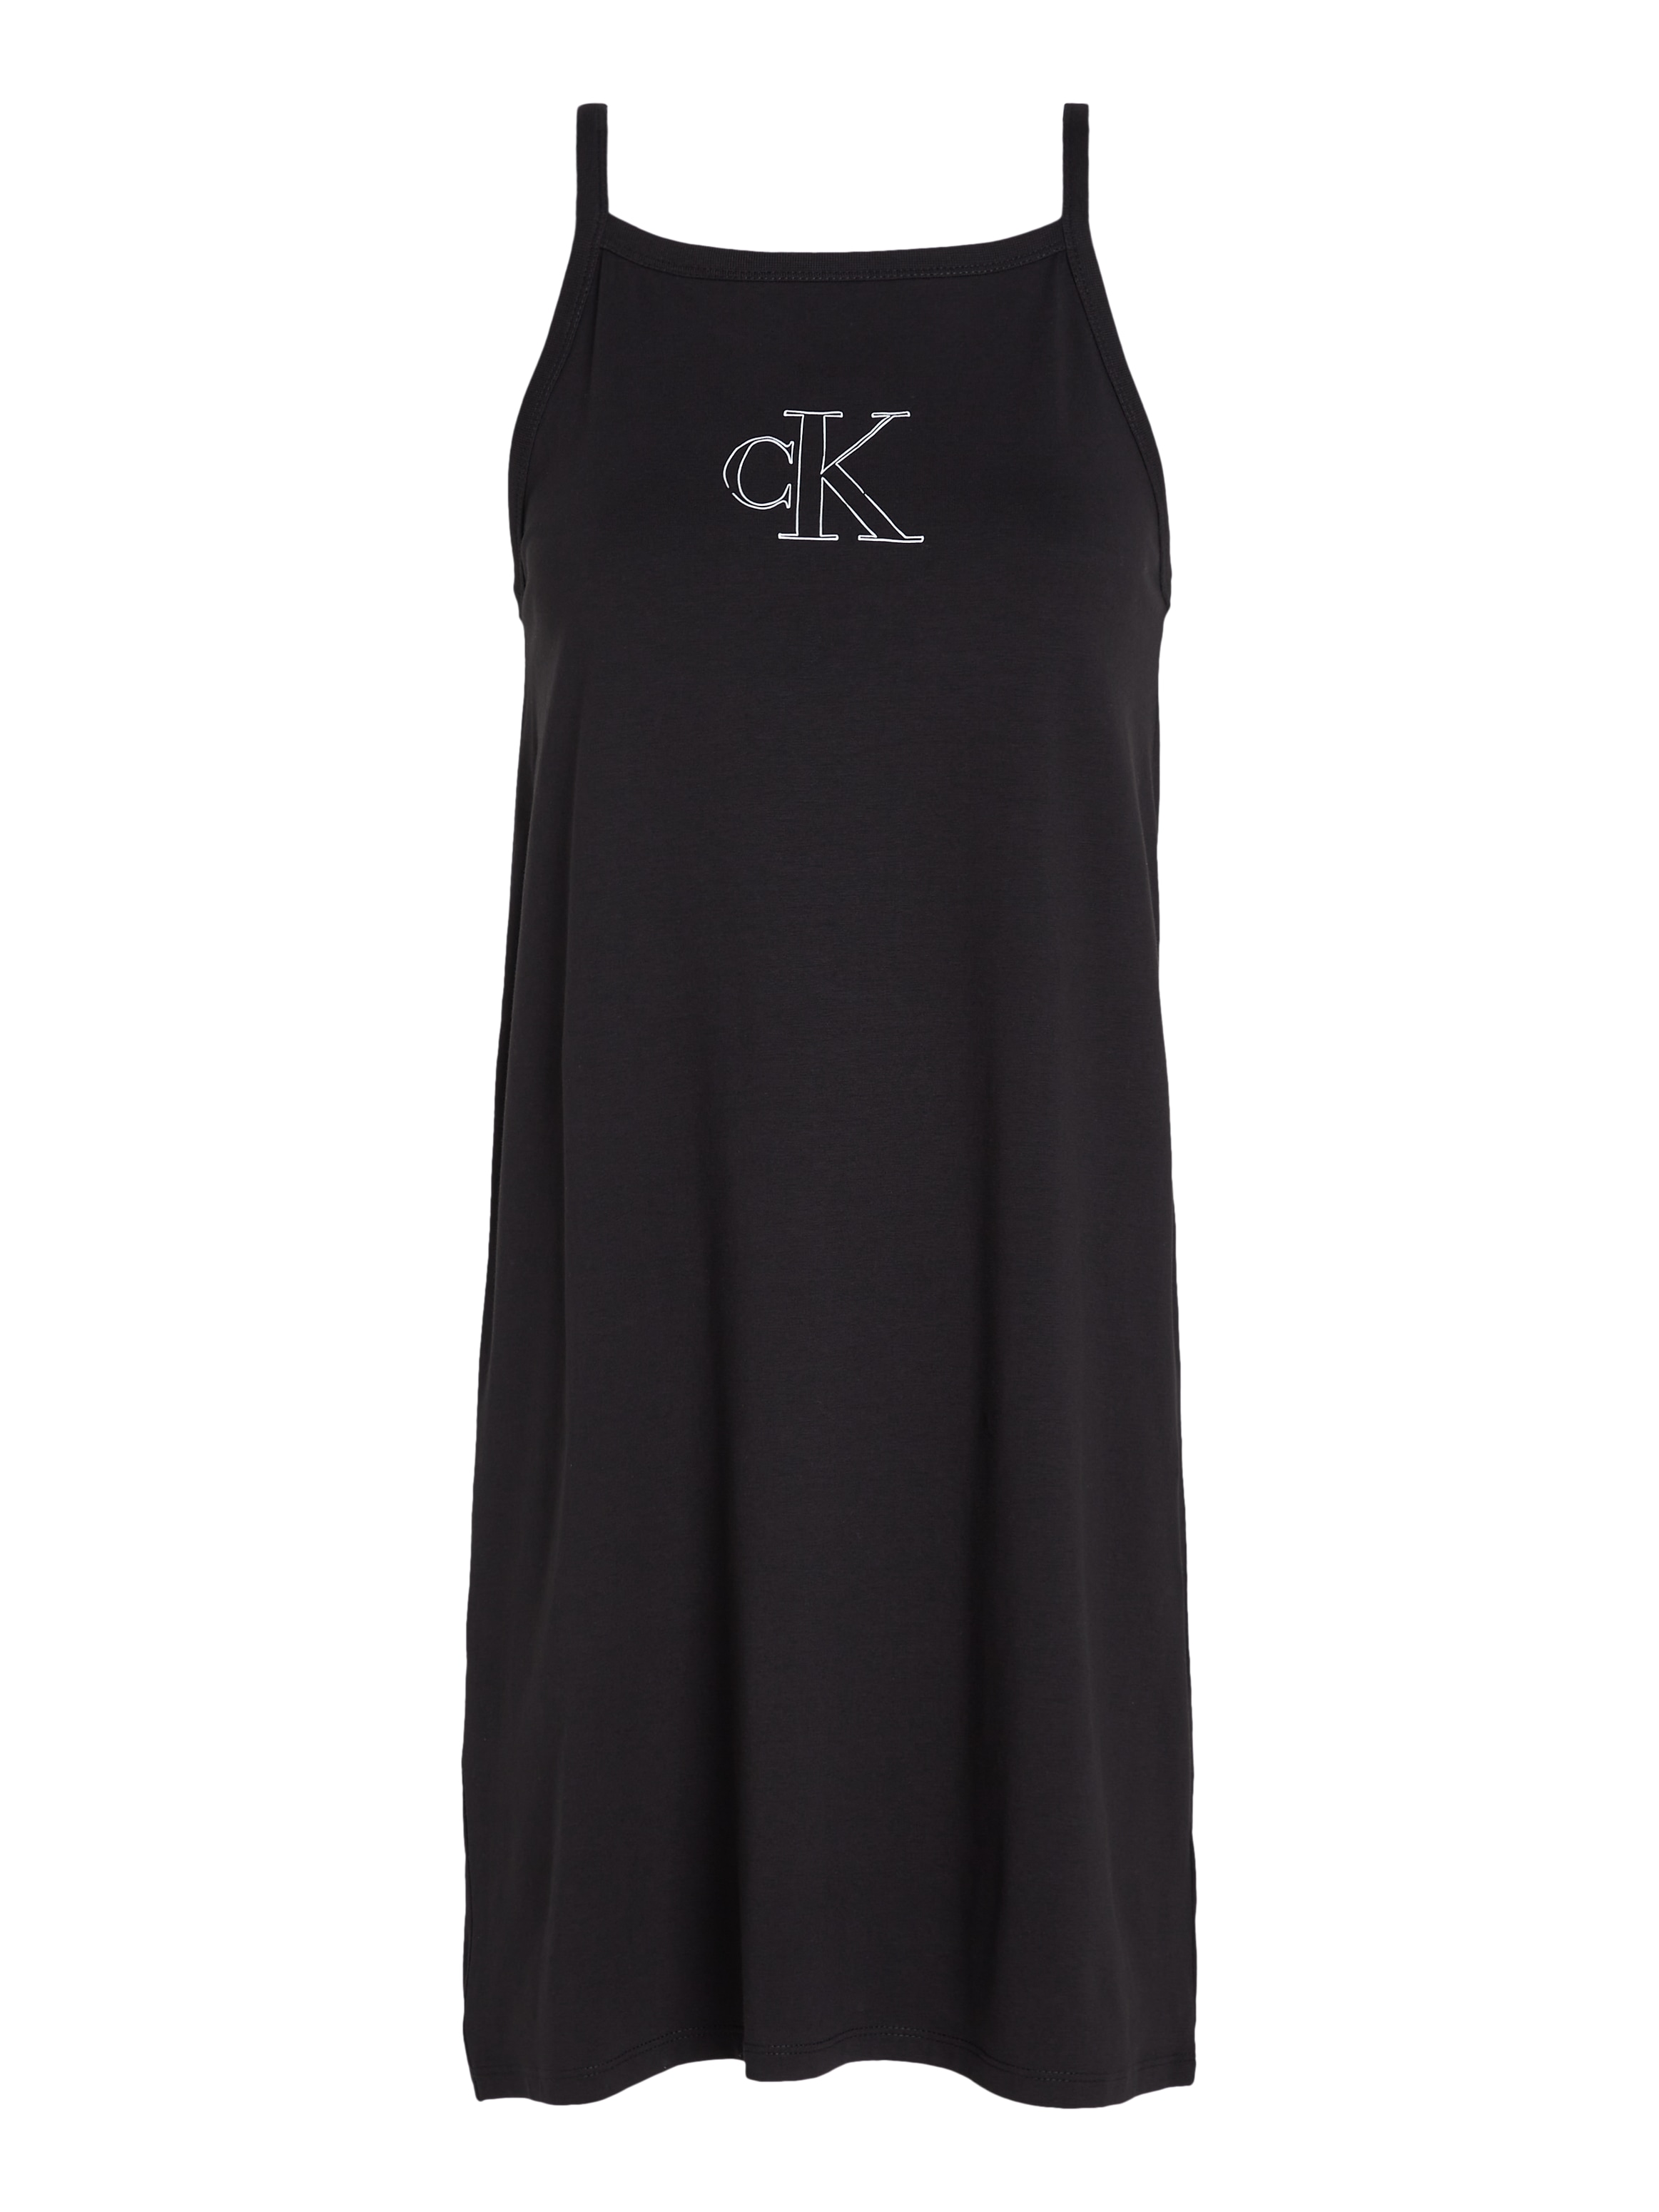 Calvin Klein Jeans Spaghettikleid »OUTLINED CK STRAPPY TANK DRESS«, mit Logoprägung